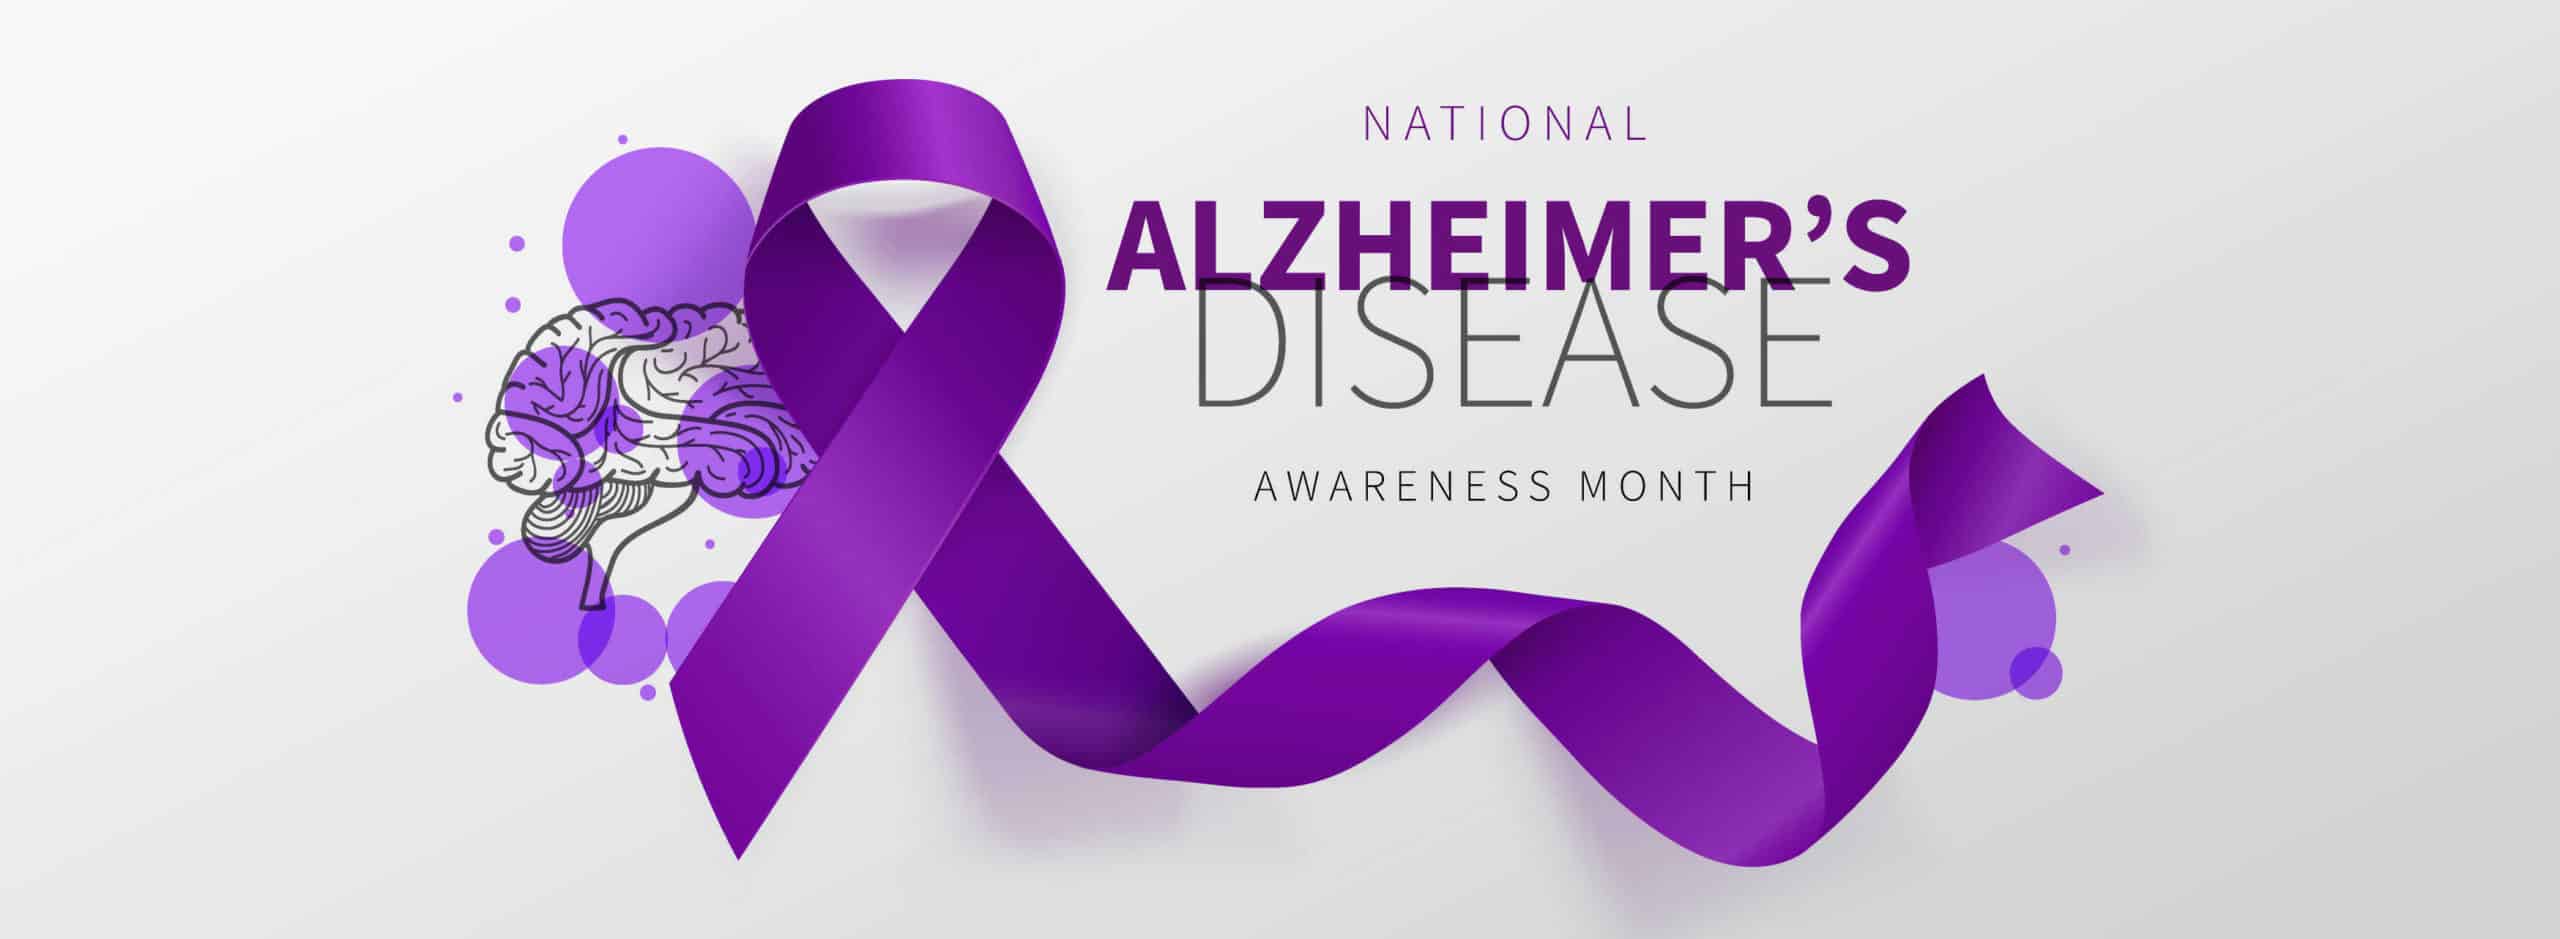 Alzheimer's awareness banner